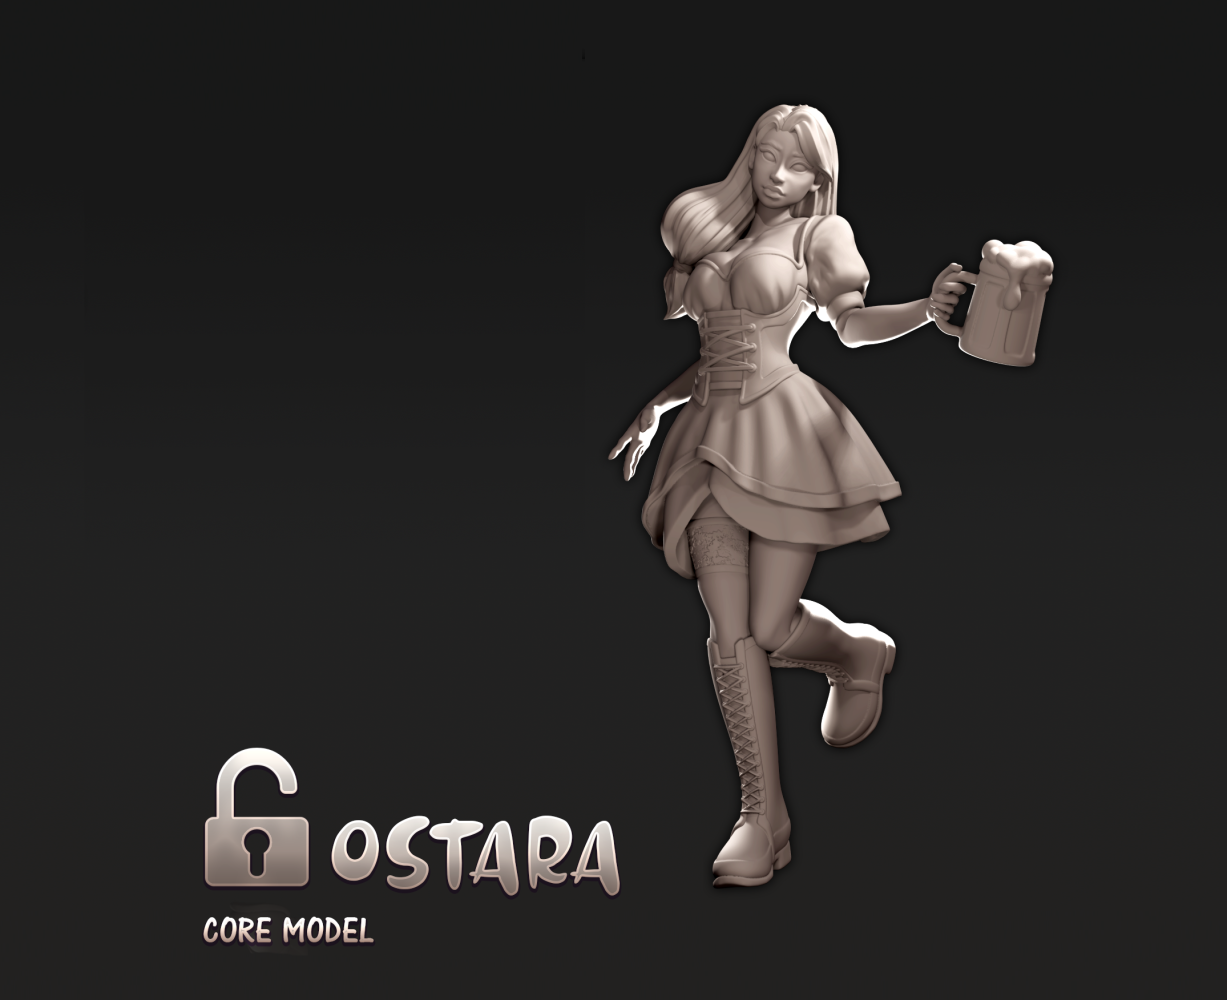 Ostara -Personal Tier's Cover